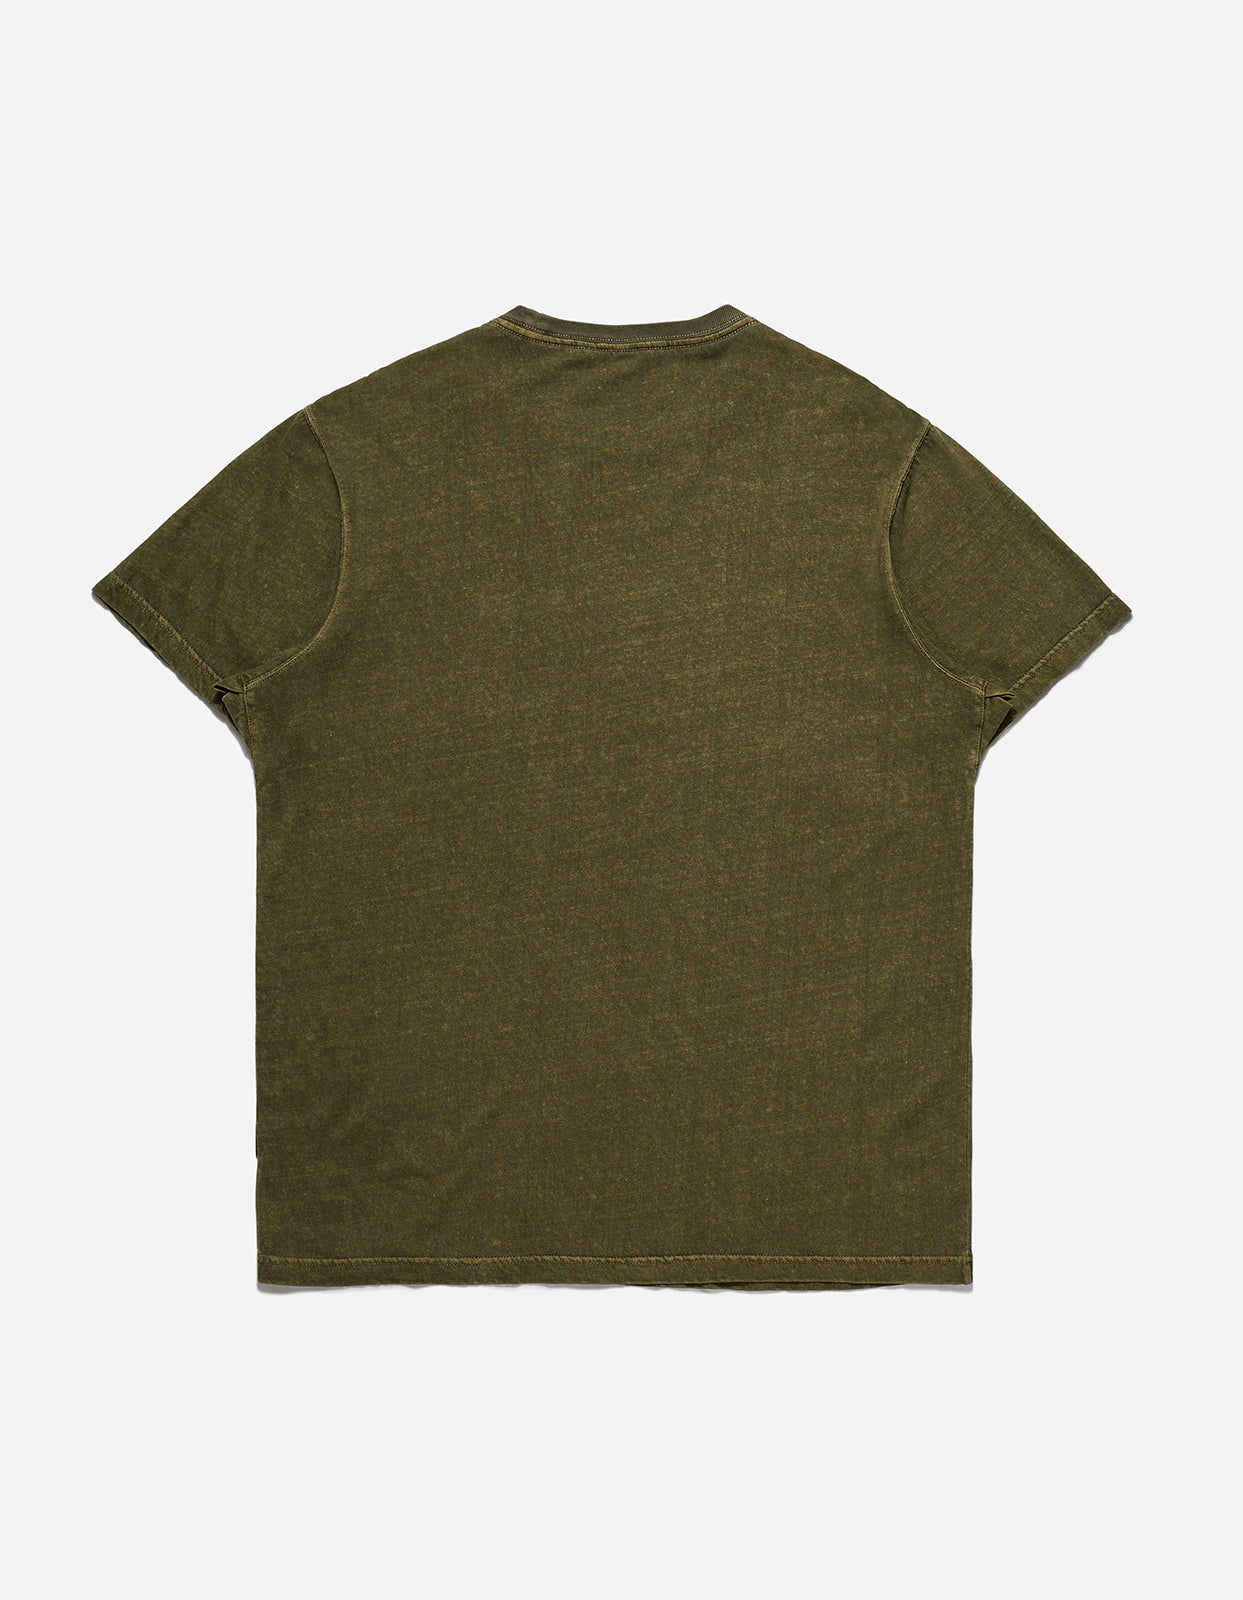 4031 Hemp Organic T-Shirt Olive OG-107F